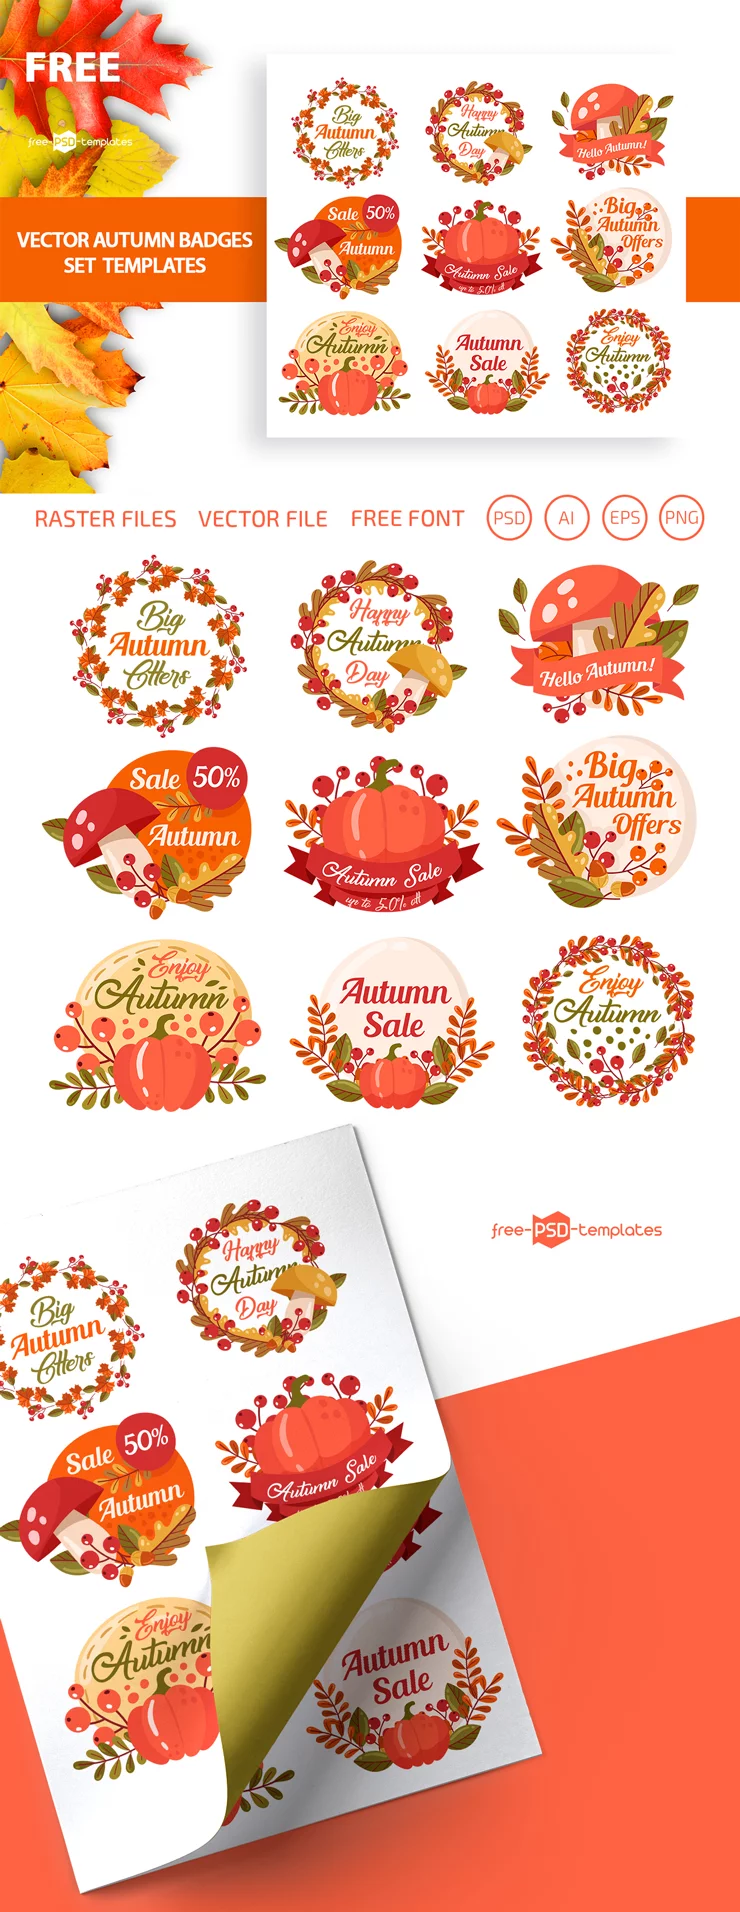 Free Autumn Badges Set Templates